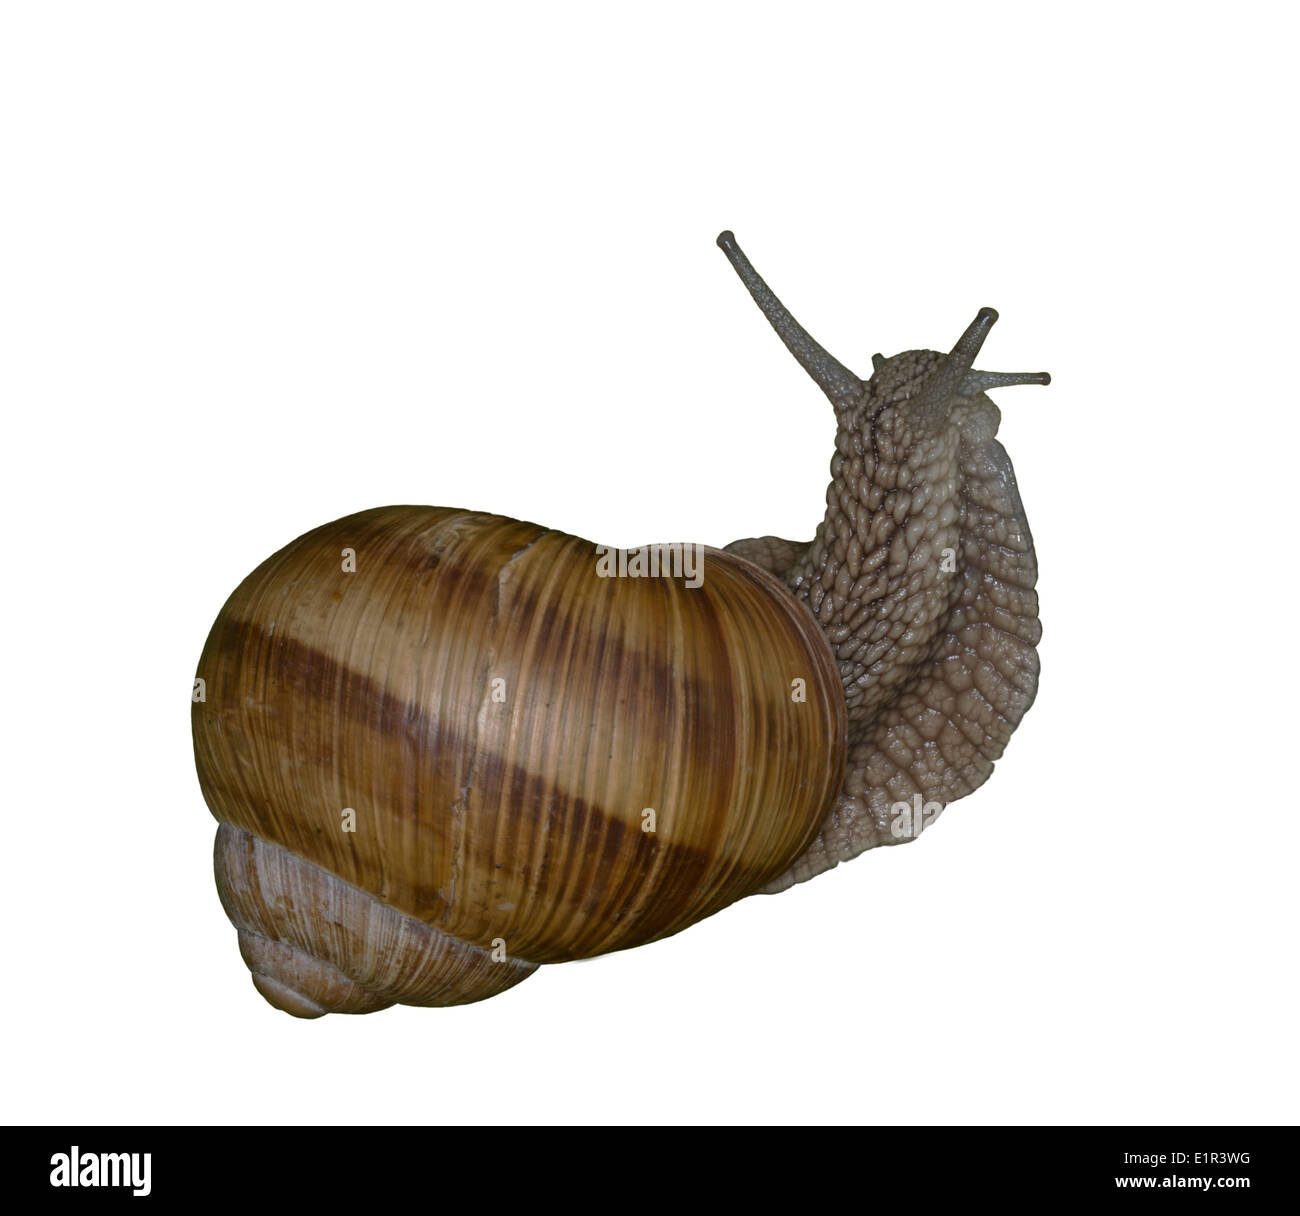 Helix pomatia escargot libre. Libre d'escargots Helix pomatia comme objet isolé. Banque D'Images